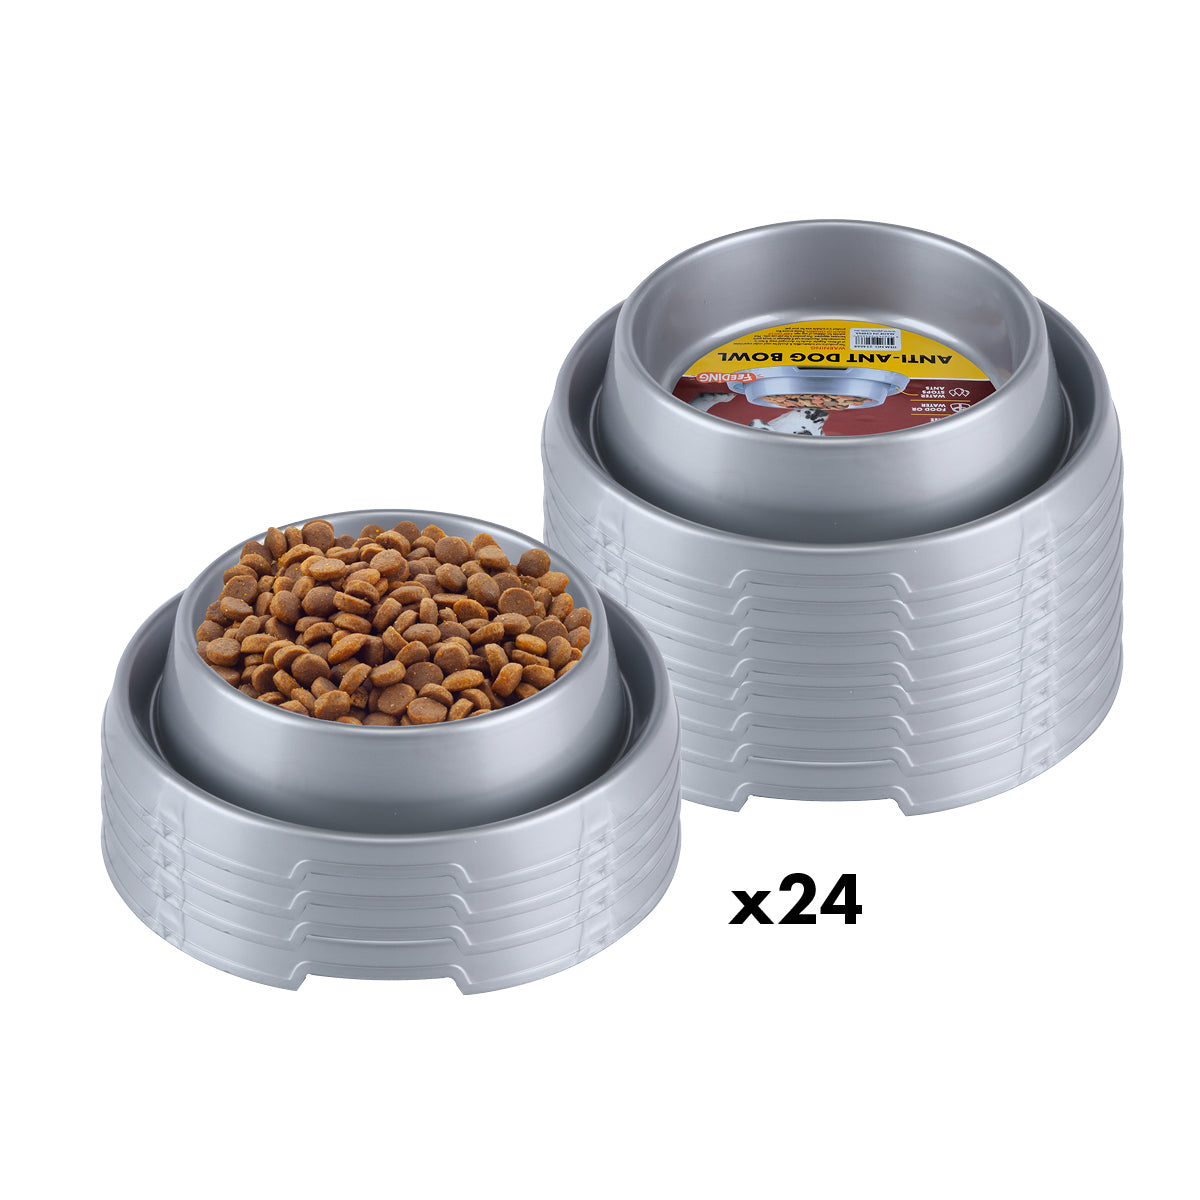 Pet Basic 24PCE Pet Bowl 650ml Ant Proof Rim Durable Non-Slip Base 22.5cm